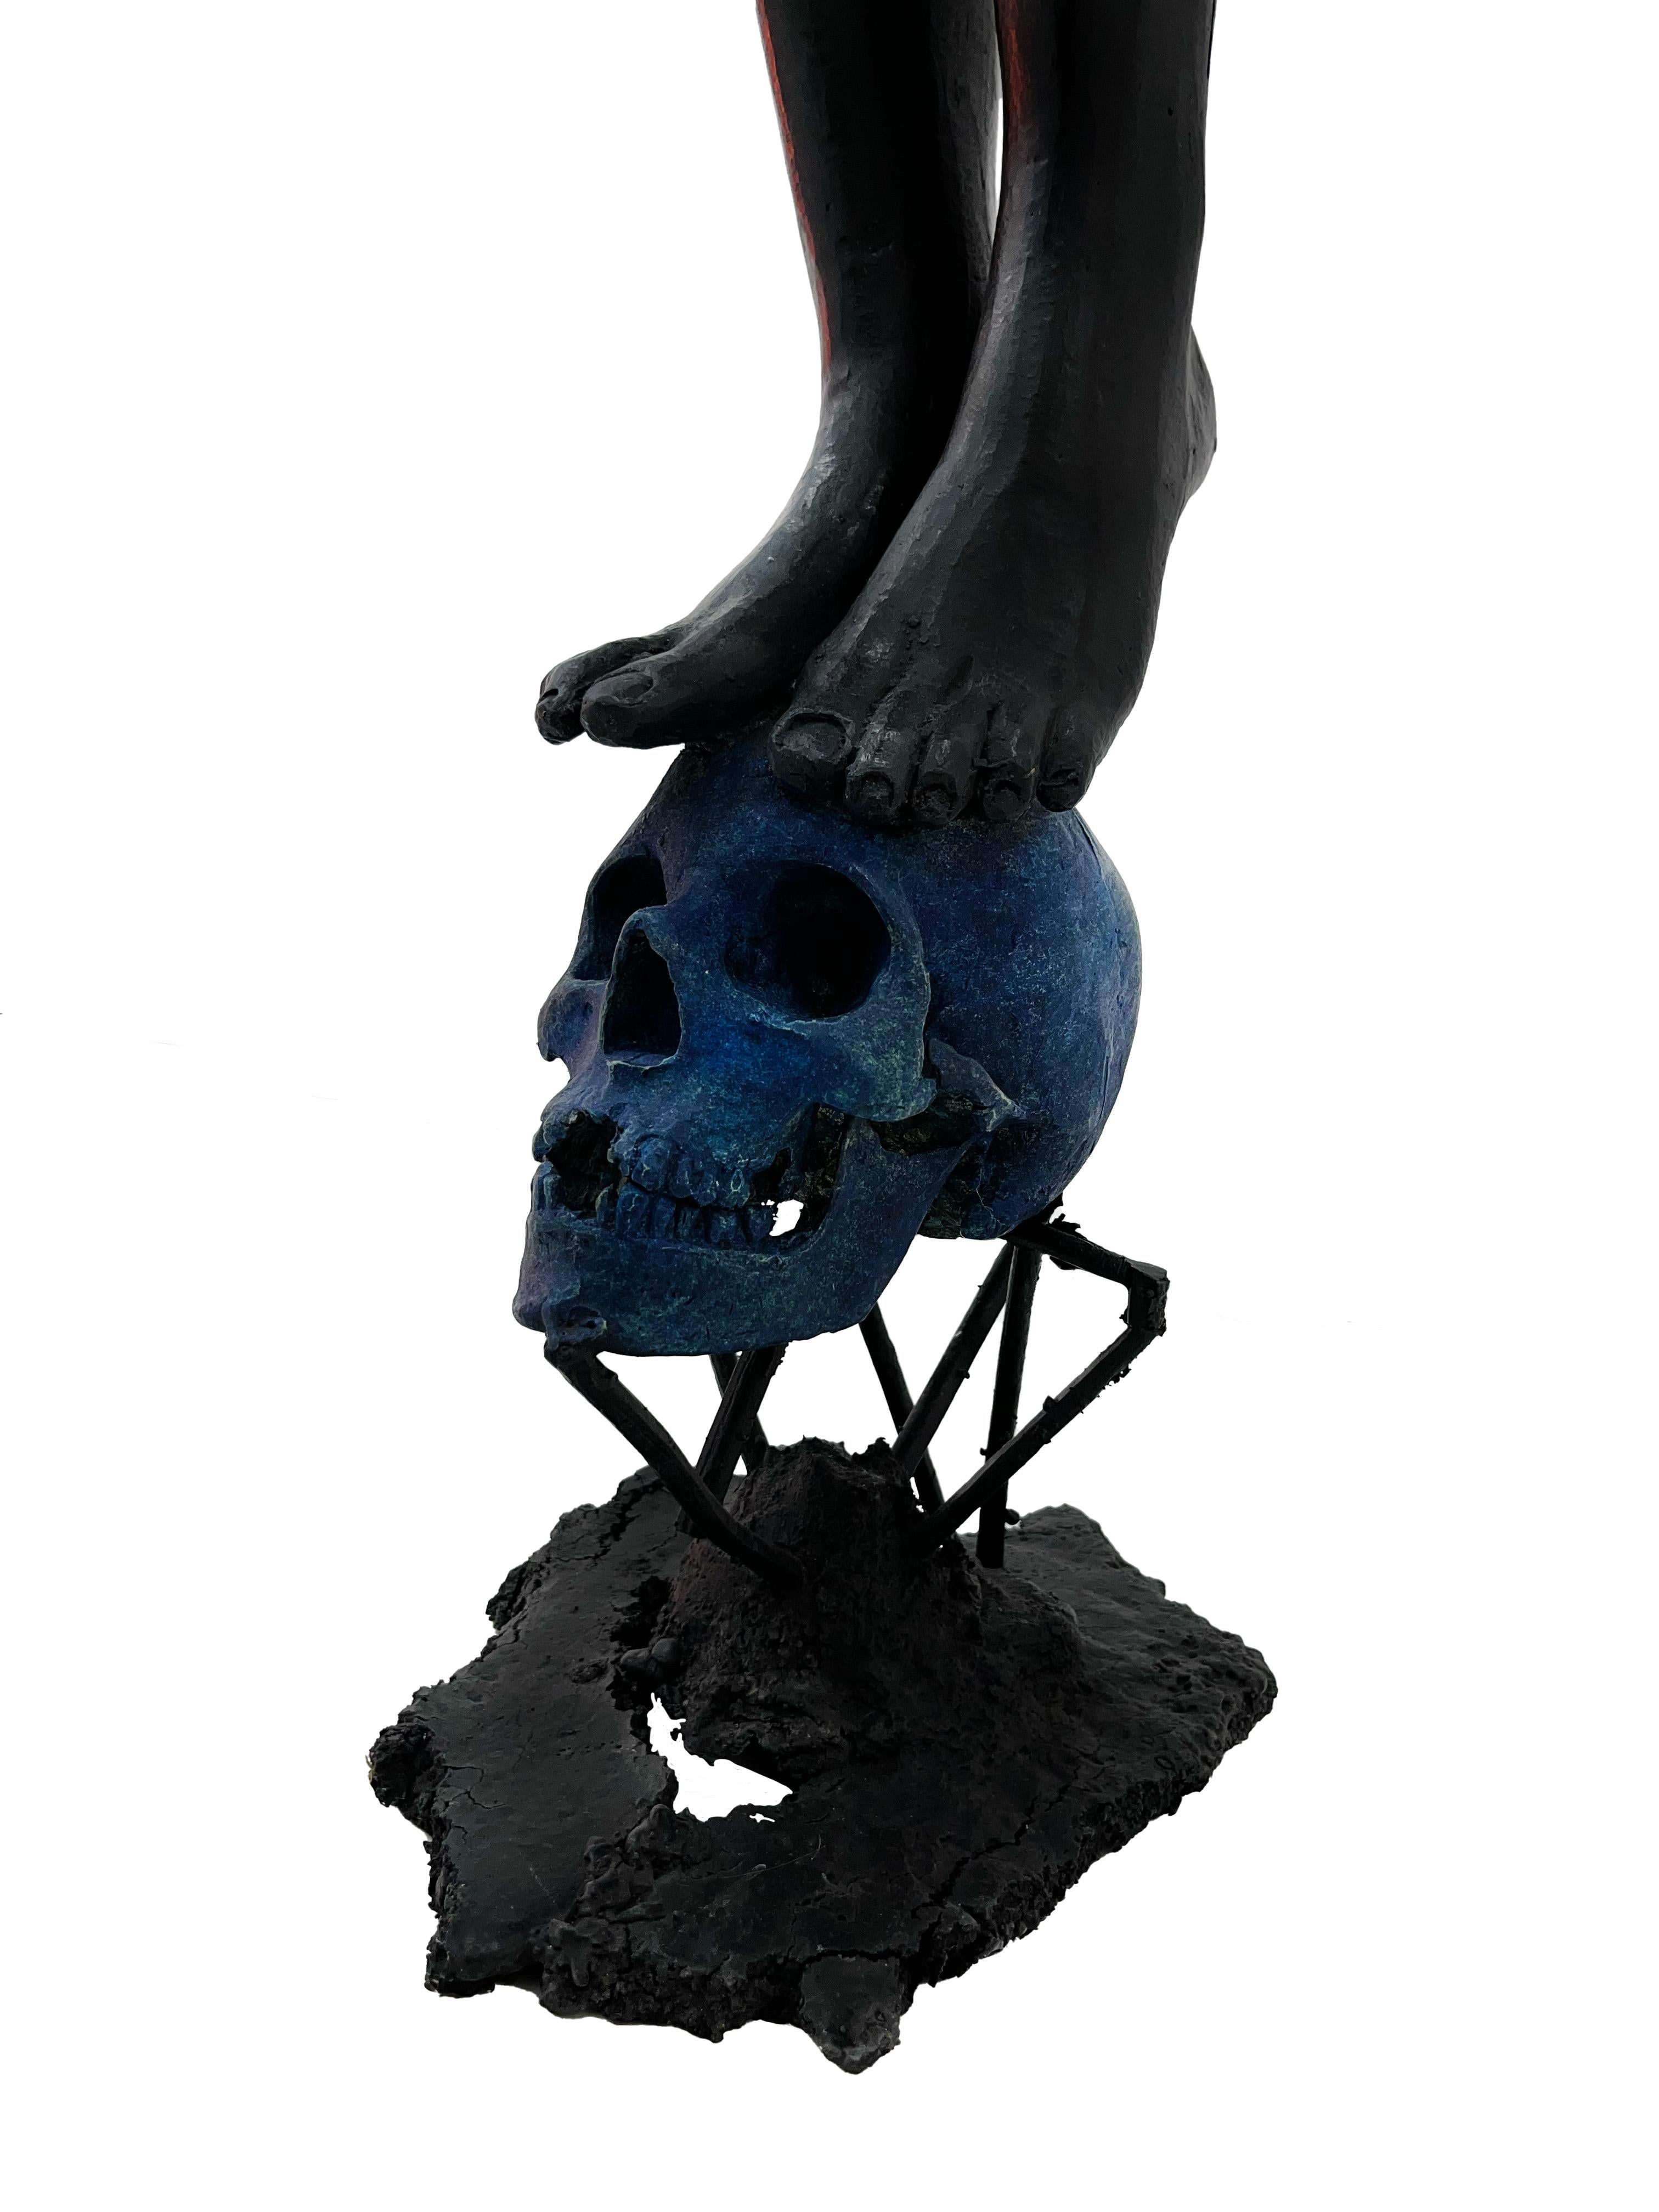 Untitled - pure bronze sculpture, life & death, human skull, woman, blue & black - Sculpture by Nicolás Guzmán